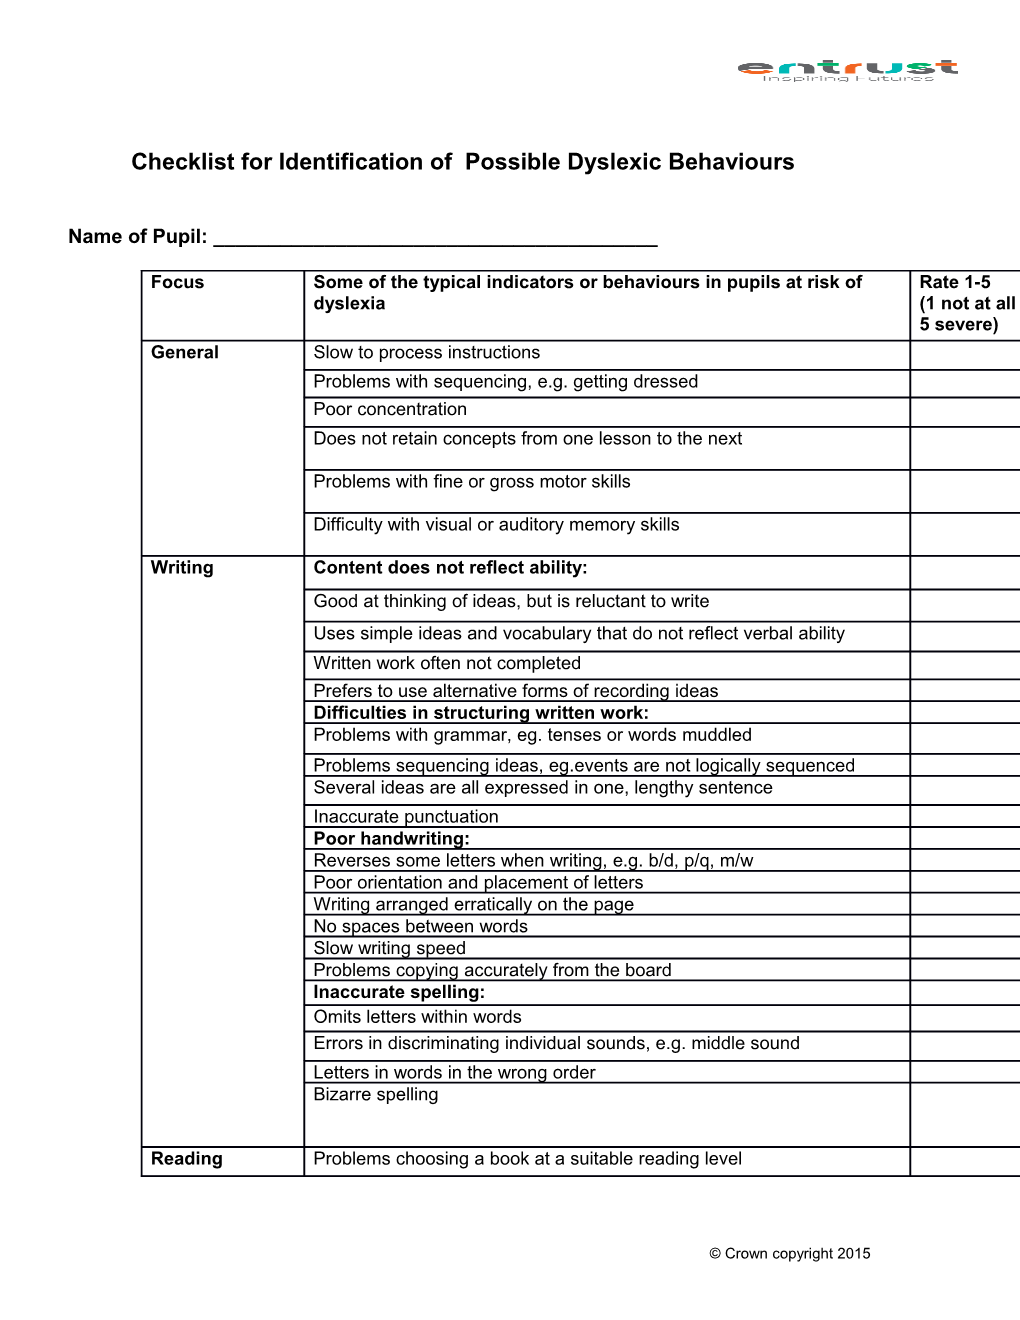 Checklist Foridentification of Possibledyslexic Behaviours